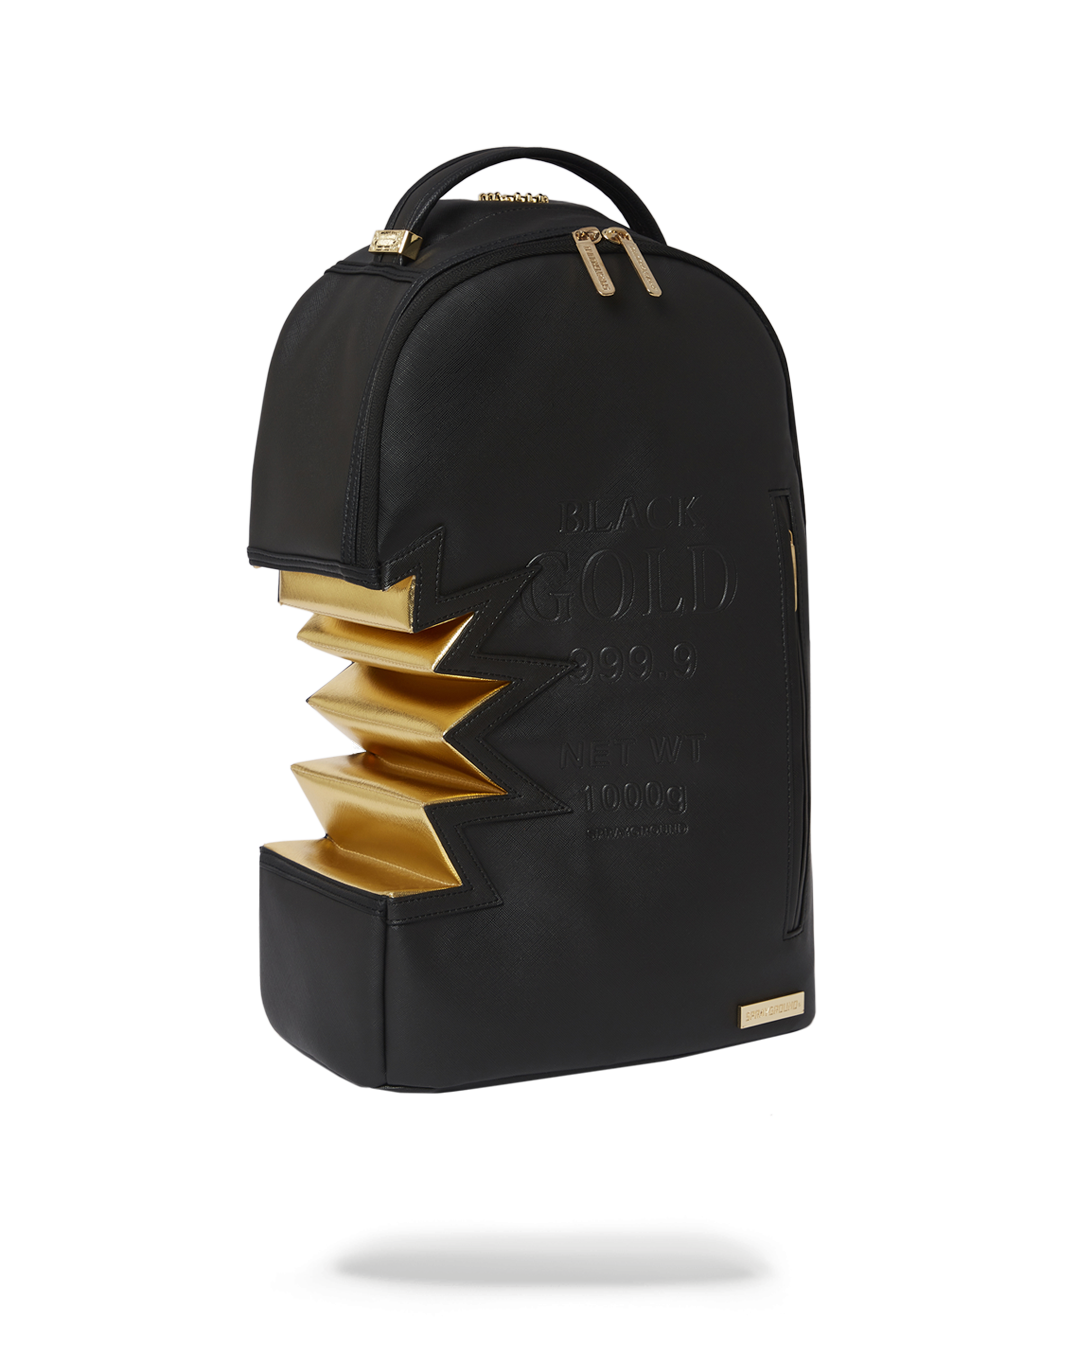 SPRAYGROUND: backpack for man - Gold  Sprayground backpack 910B3490NSZ  online at